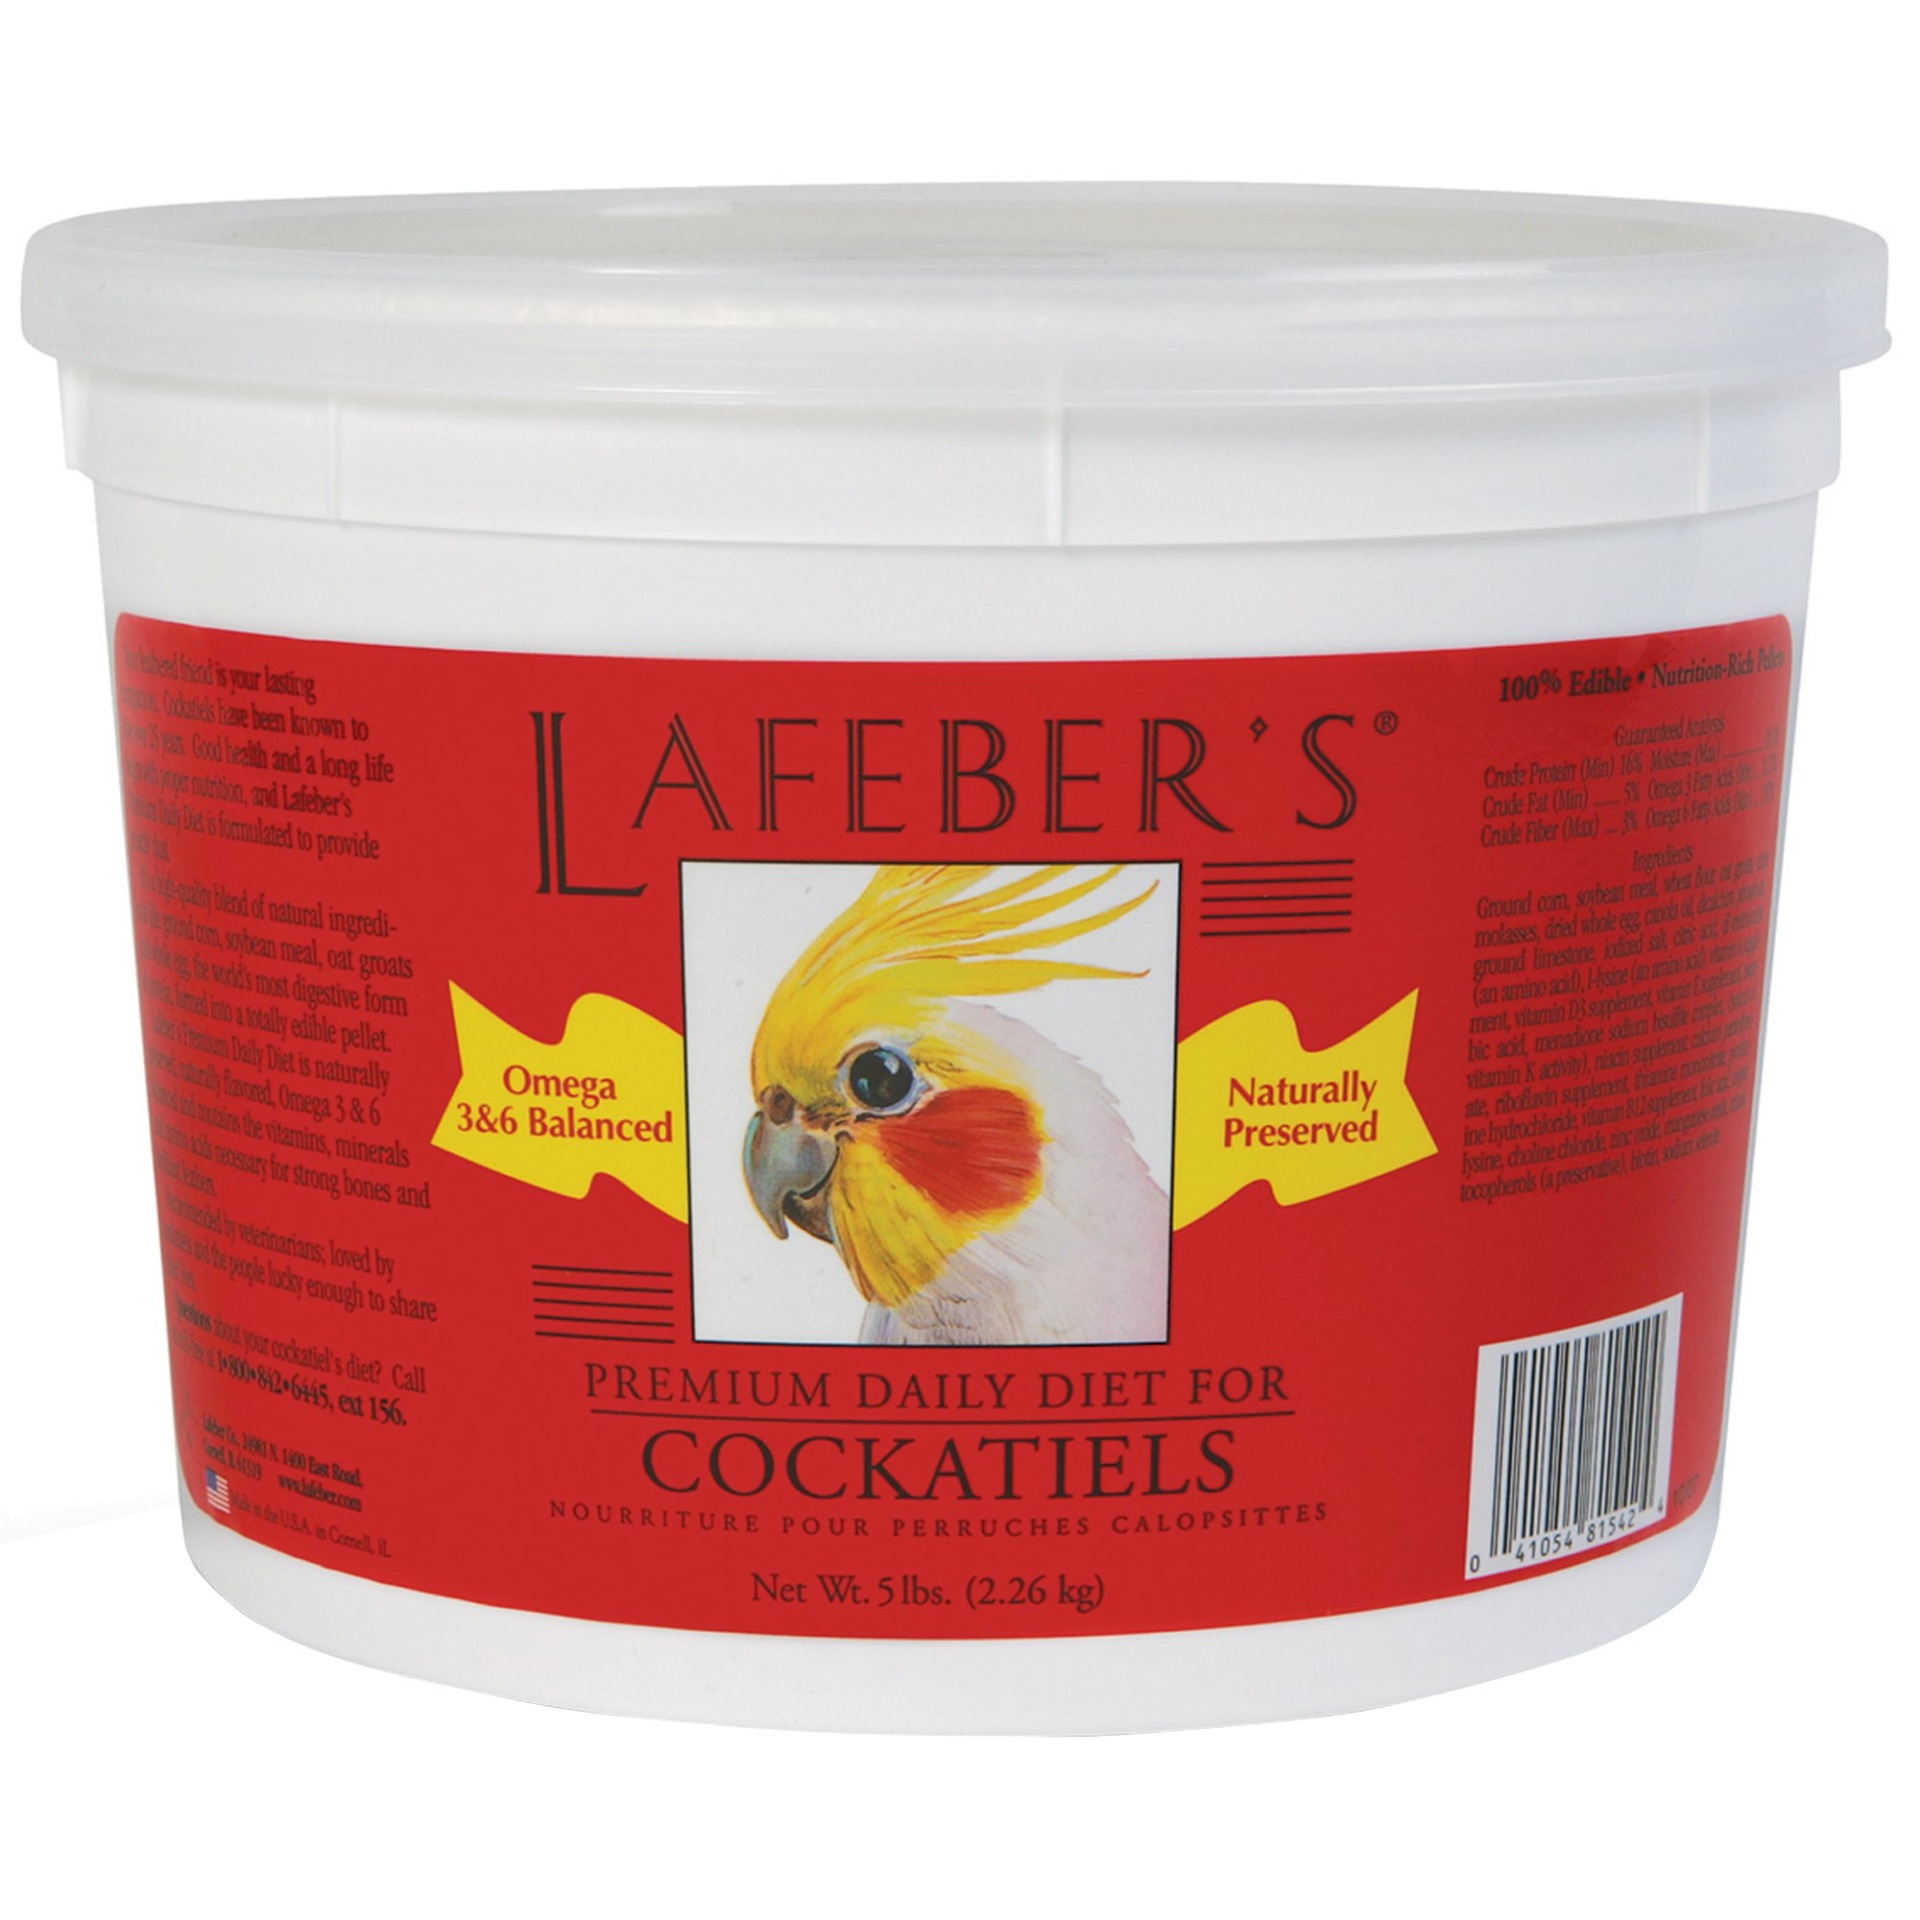 slide 1 of 1, Lafeber's Premium Daily Diet for Cockatiels, 5 lb